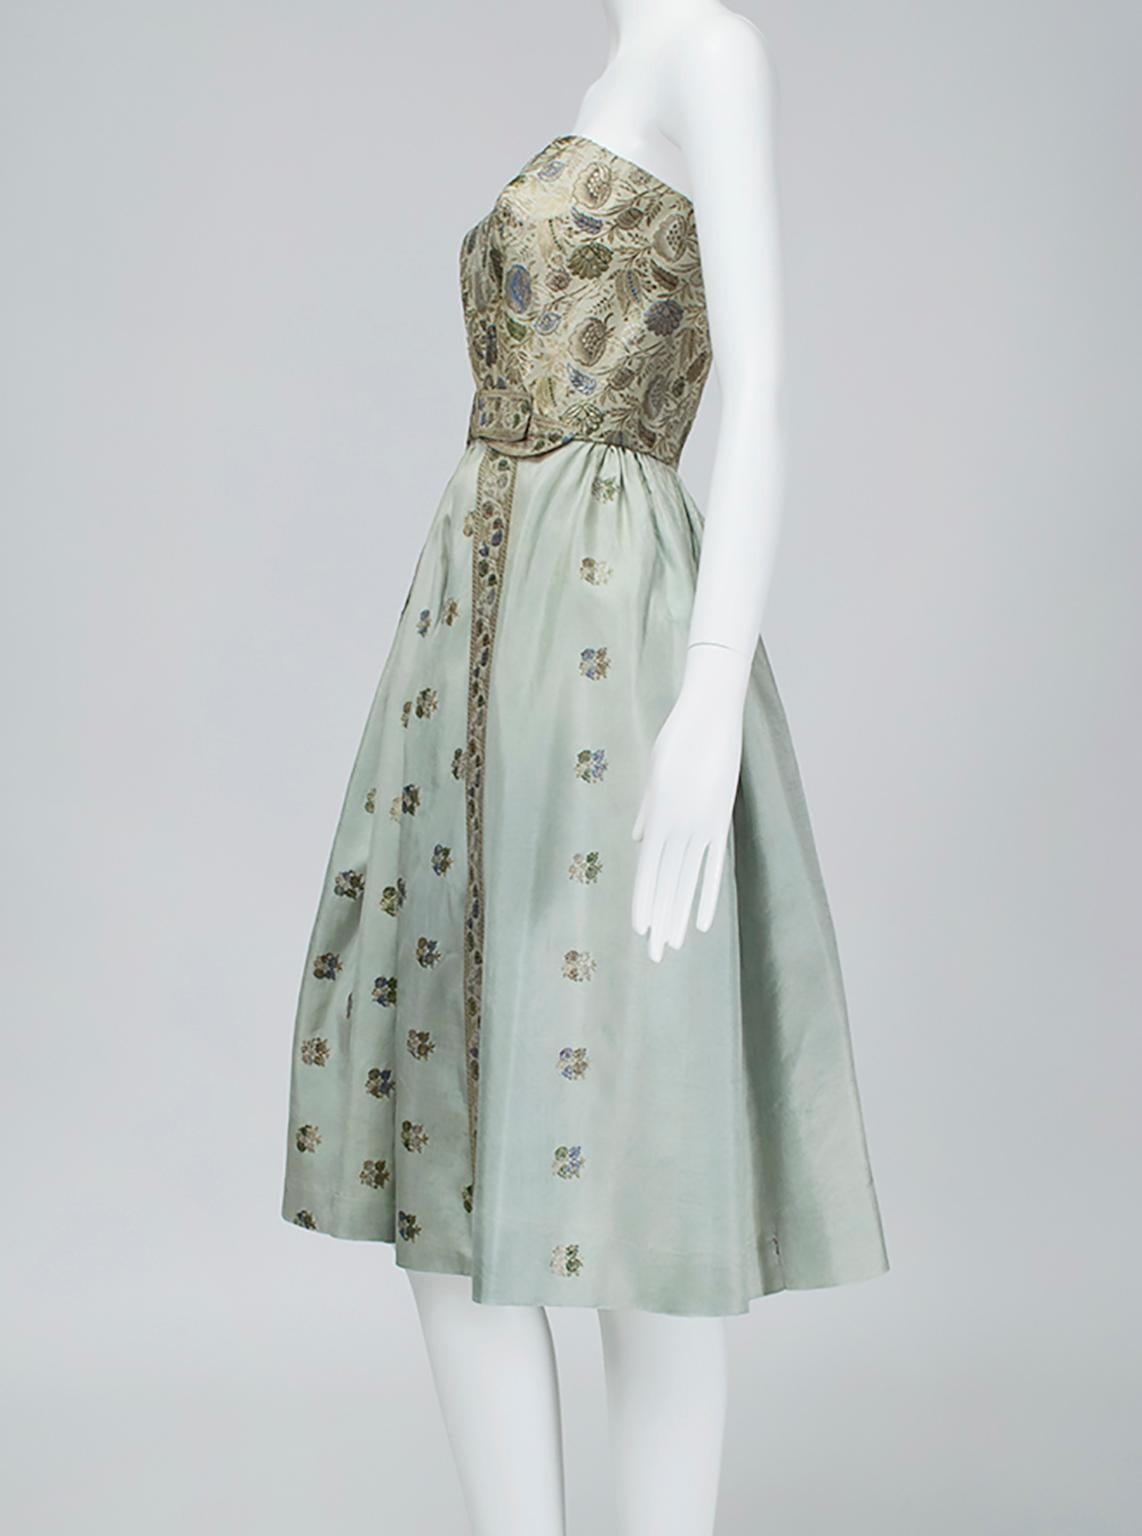 silver brocade dress